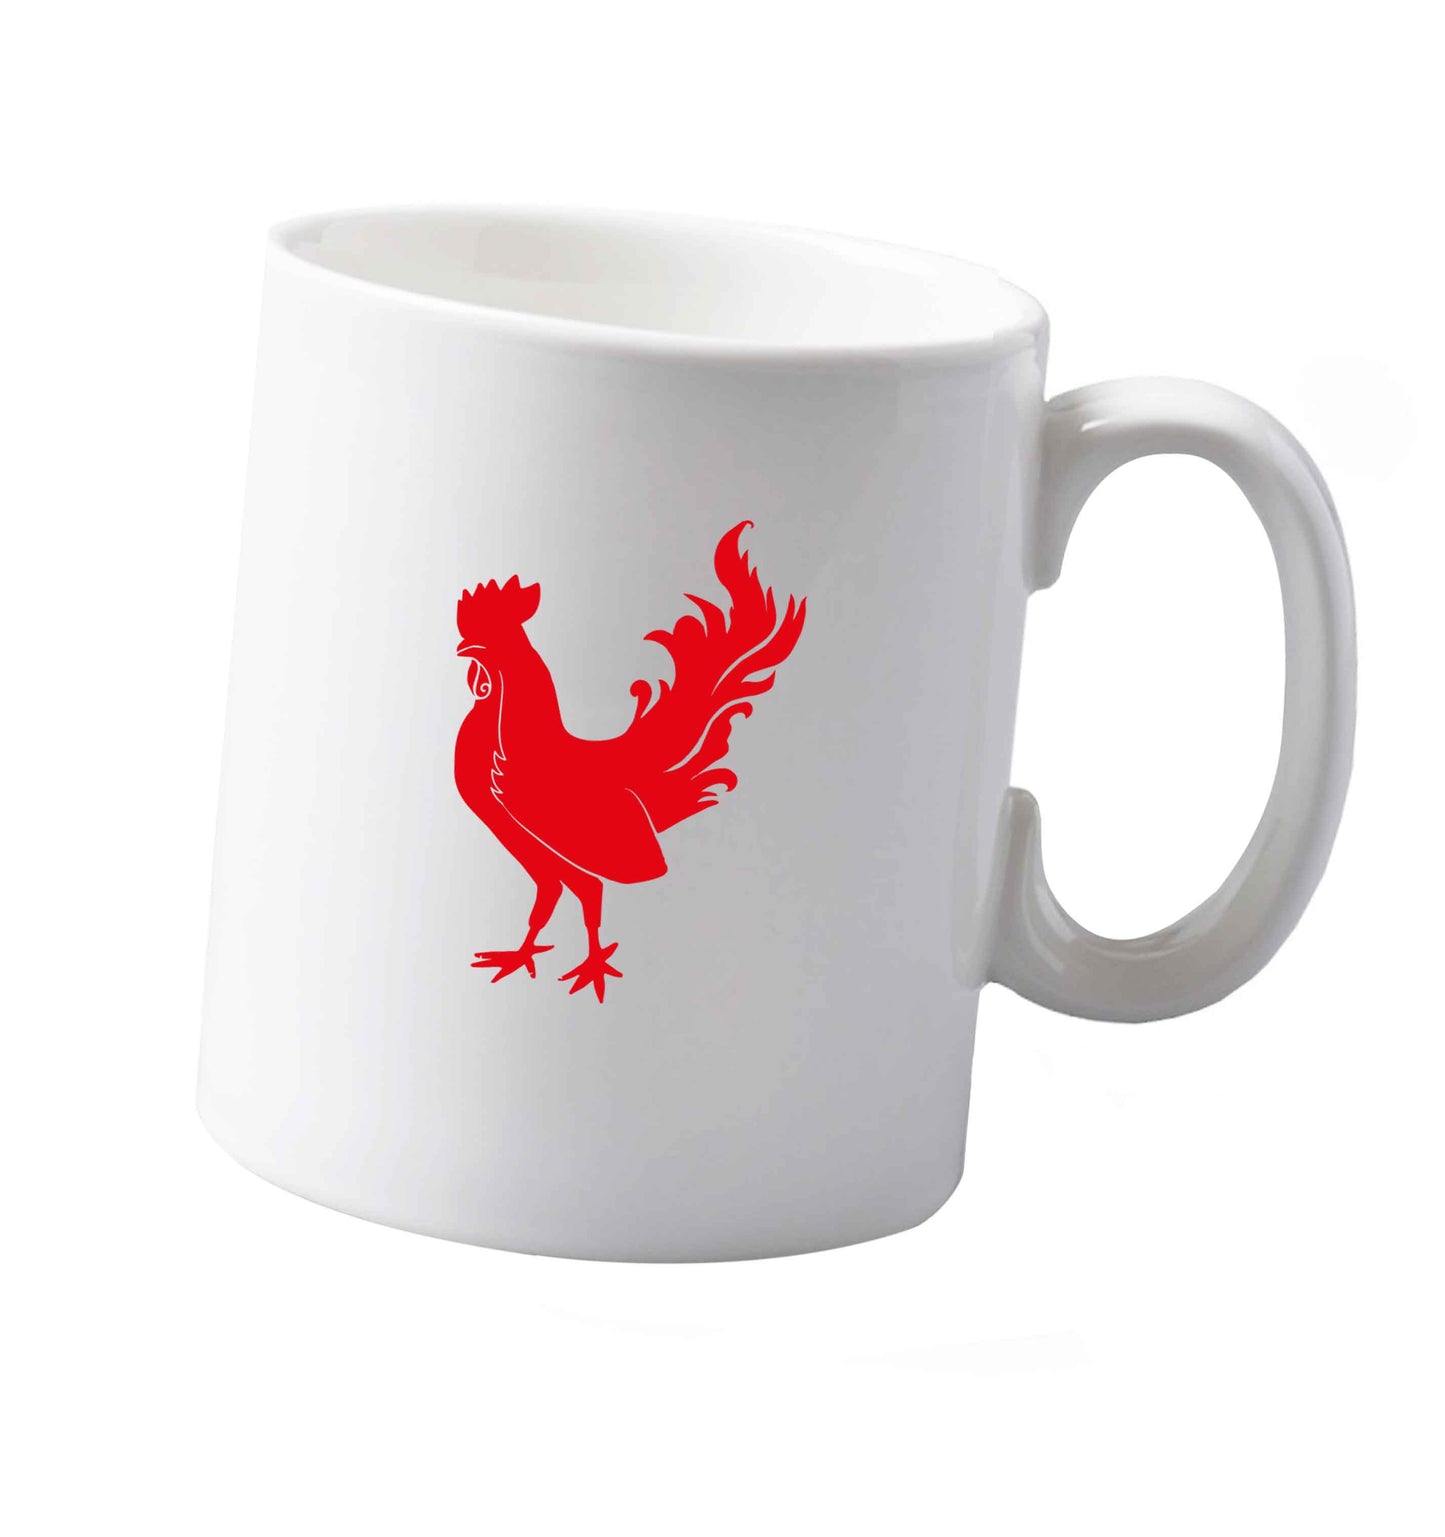 10 oz Tis The Season to Drink Whisky ceramic mug both sides